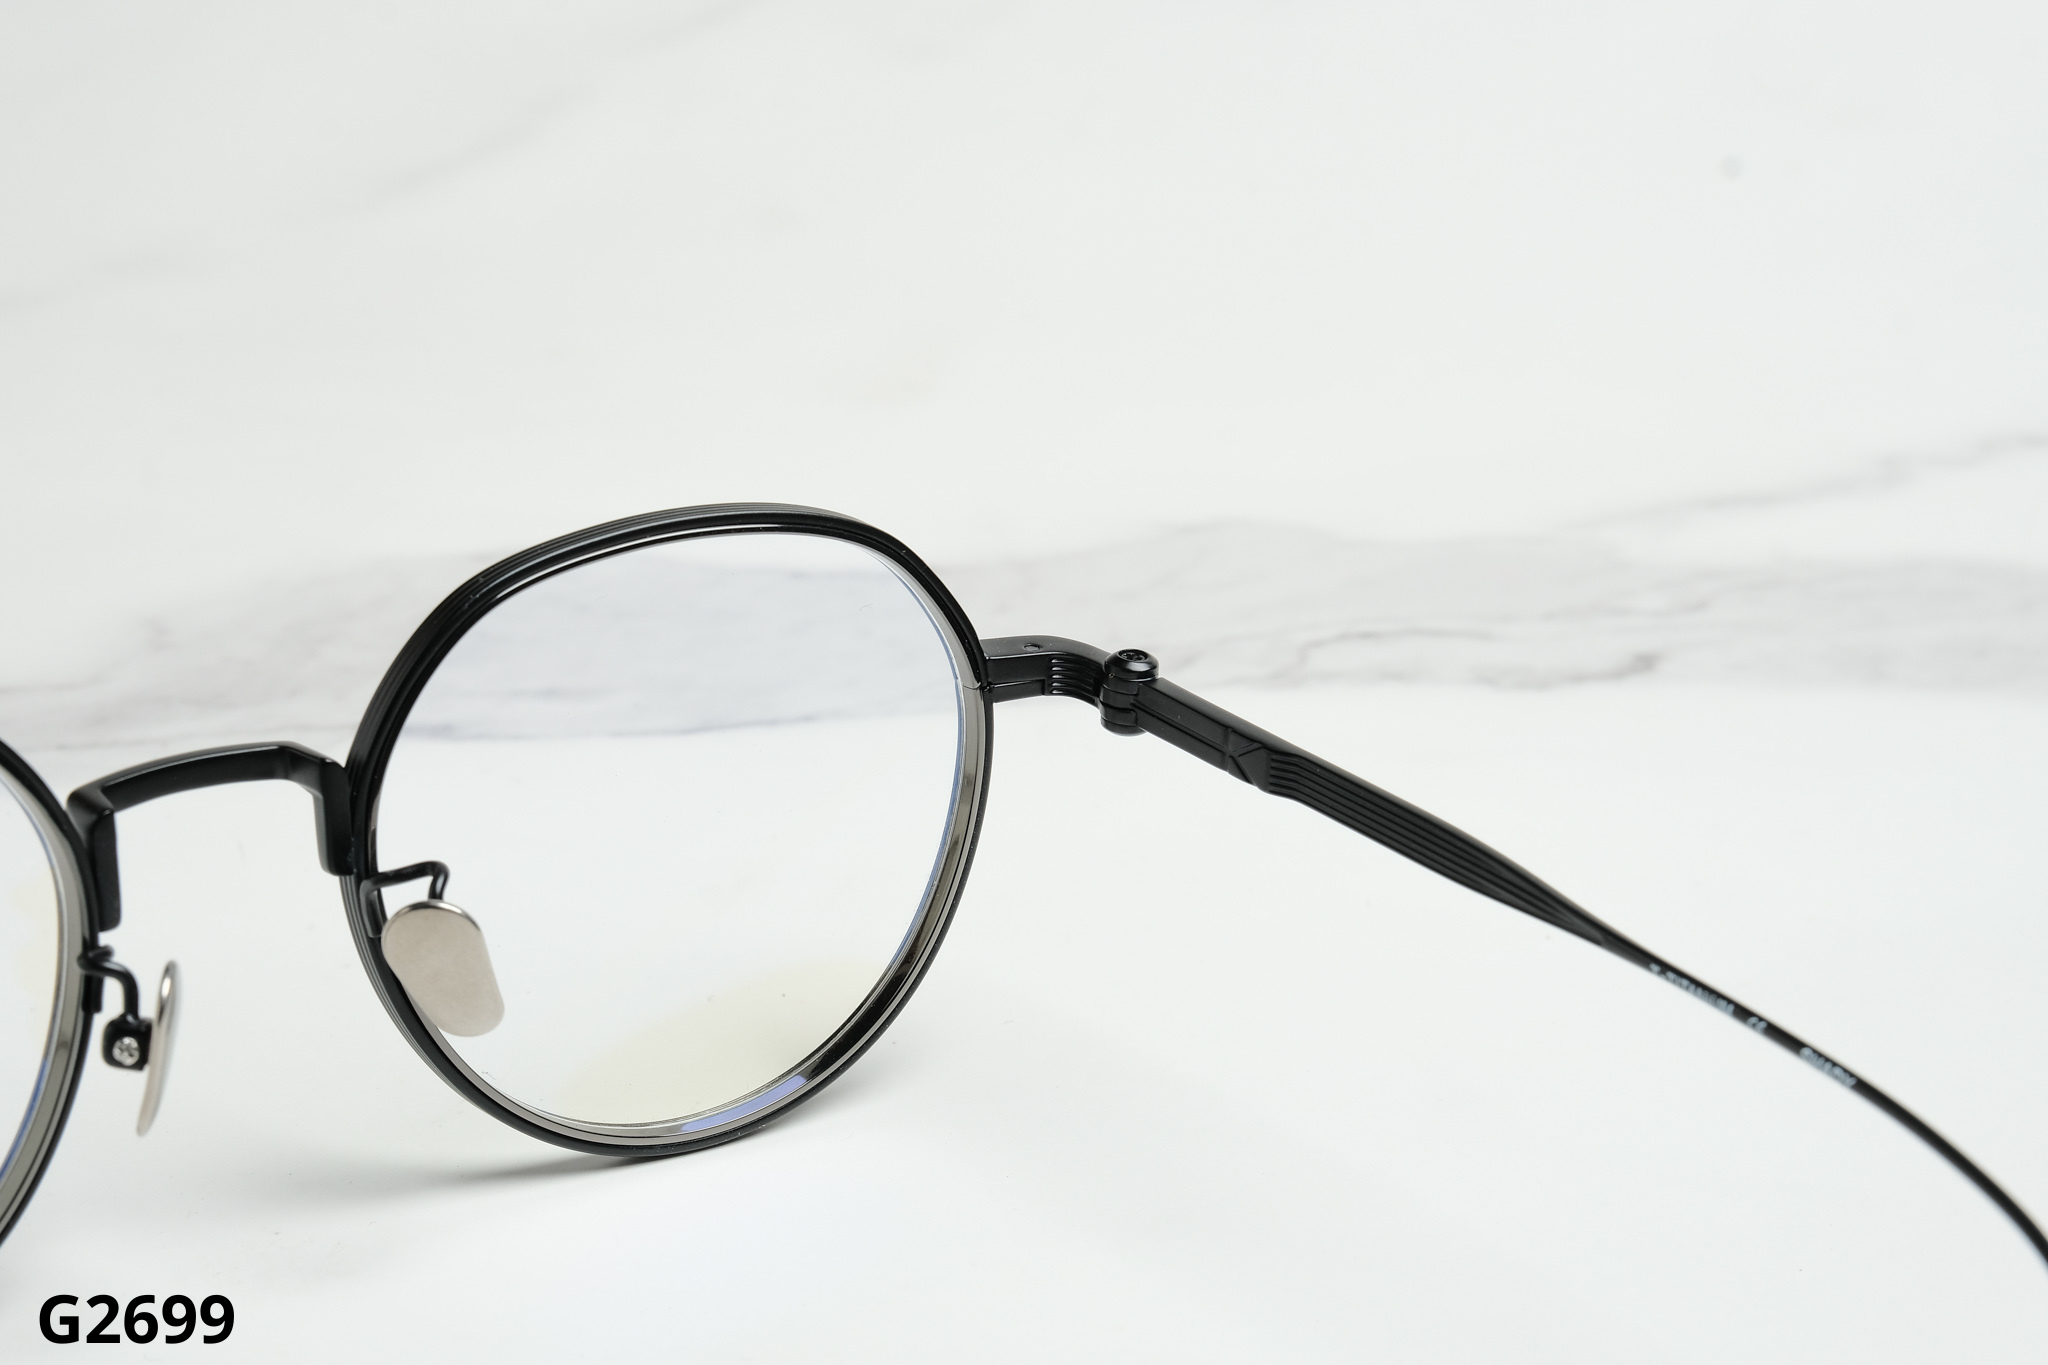  SHADY Eyewear - Glasses - G2699 